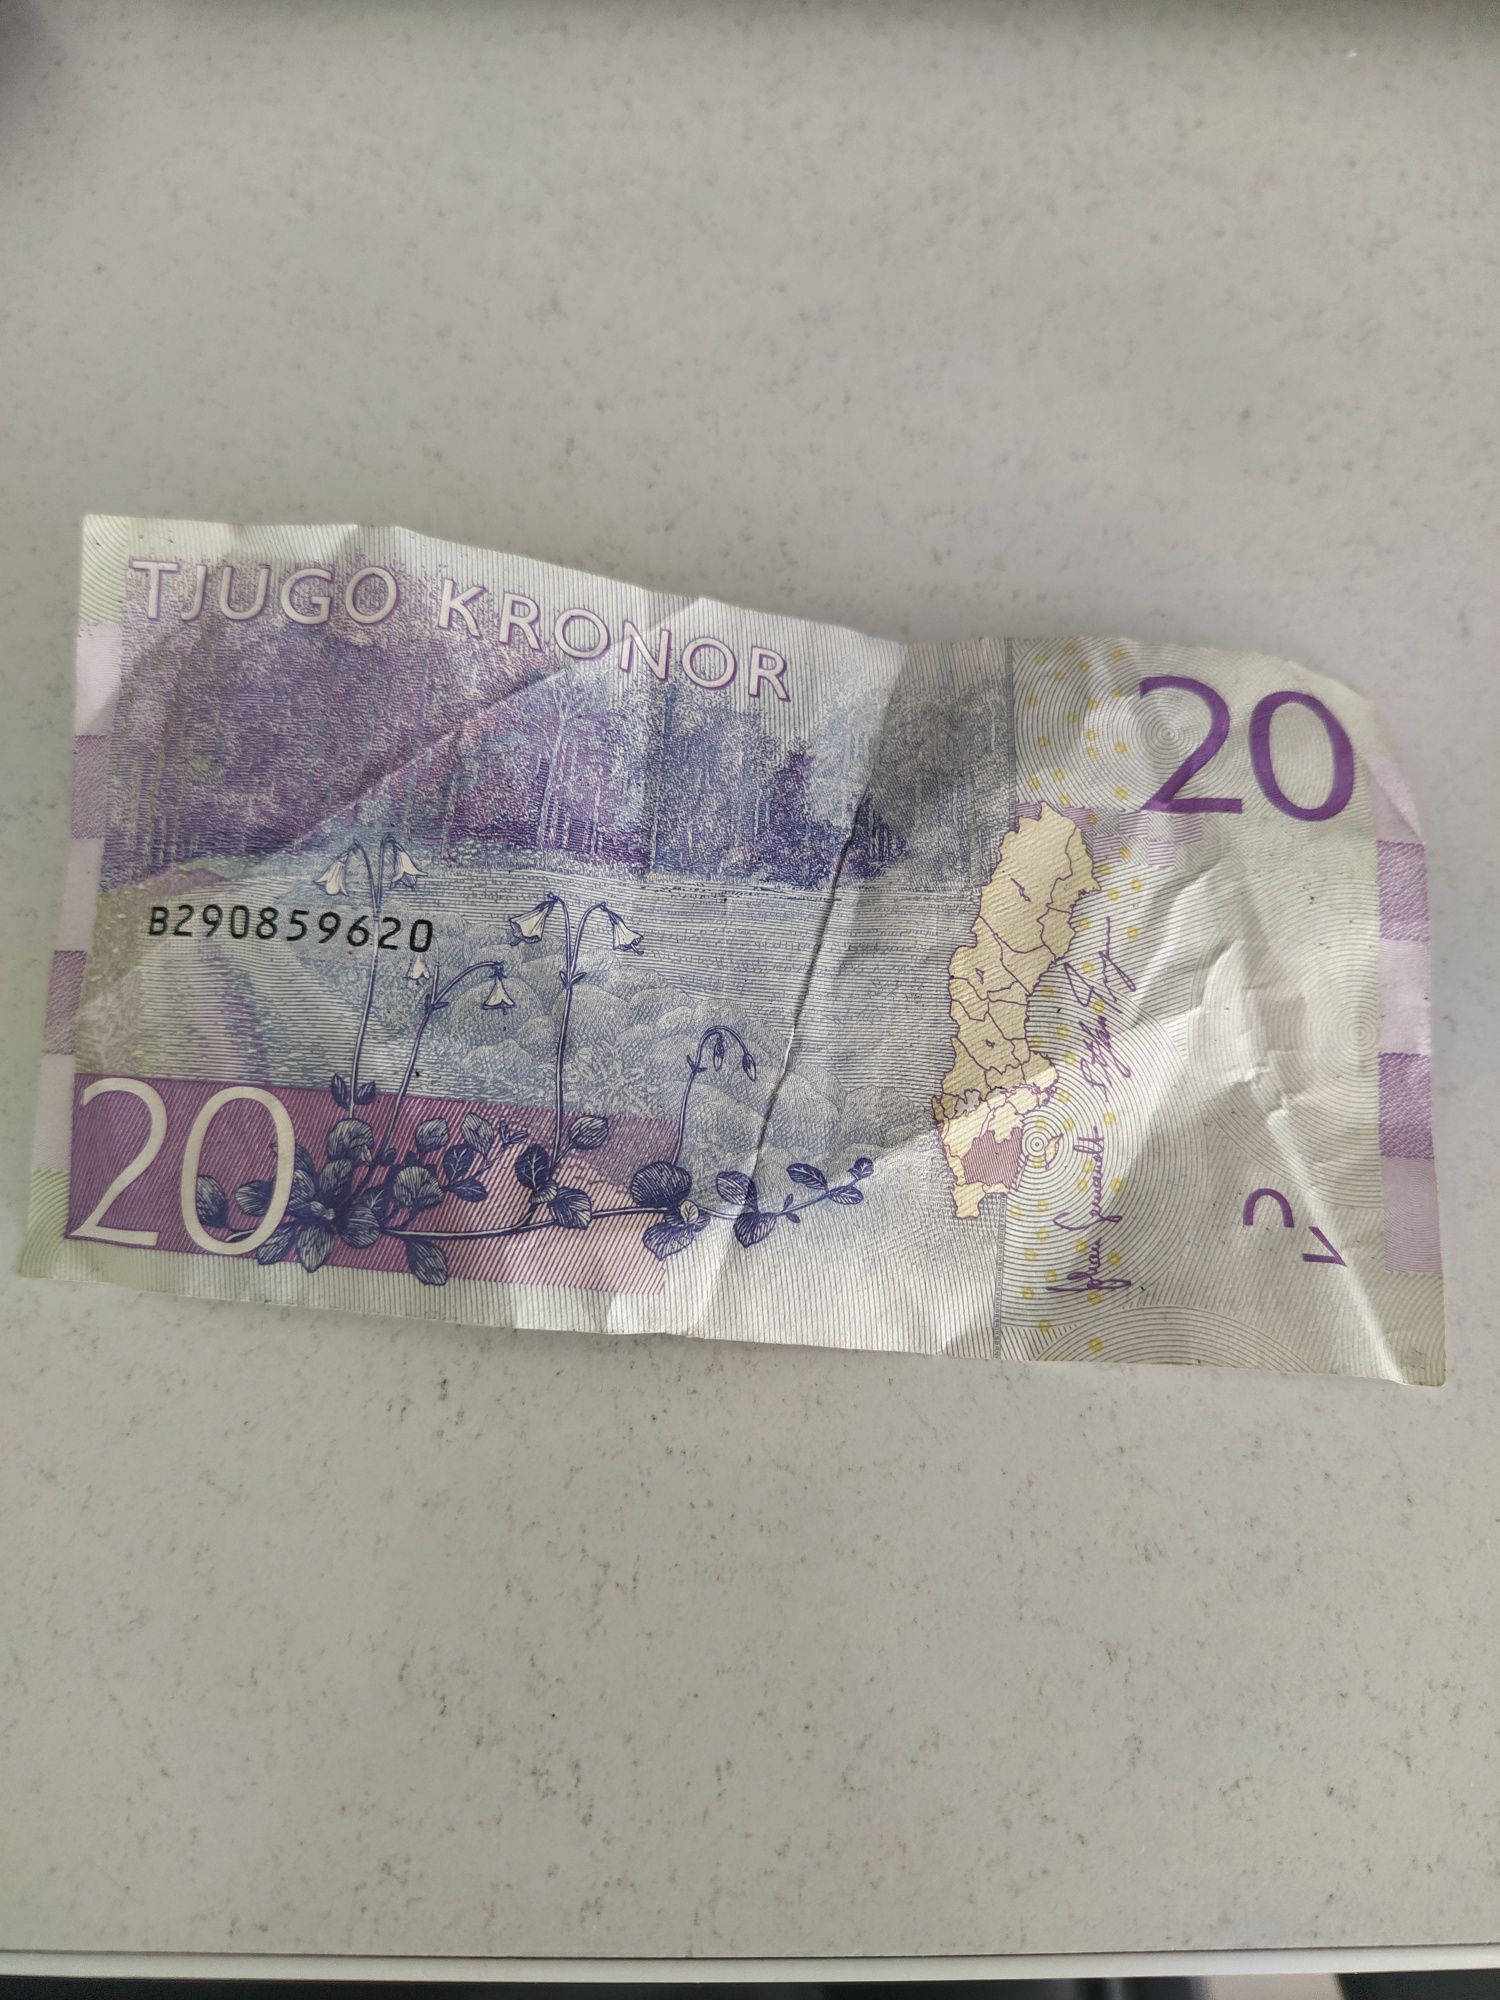 Bancnota: 20 kronor Sweden - 20 de coroane suedeze